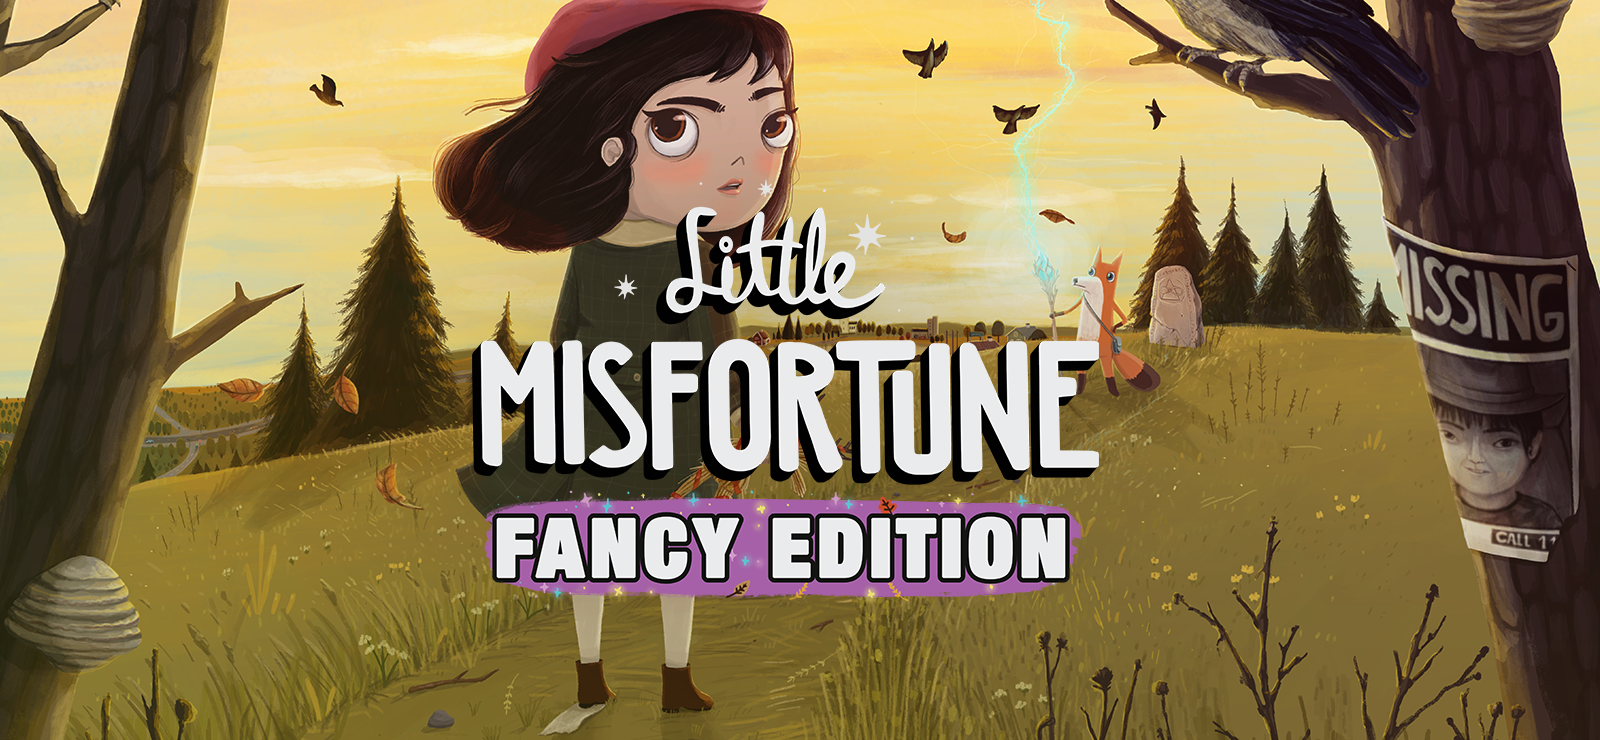 Little Misfortune Fancy Edition